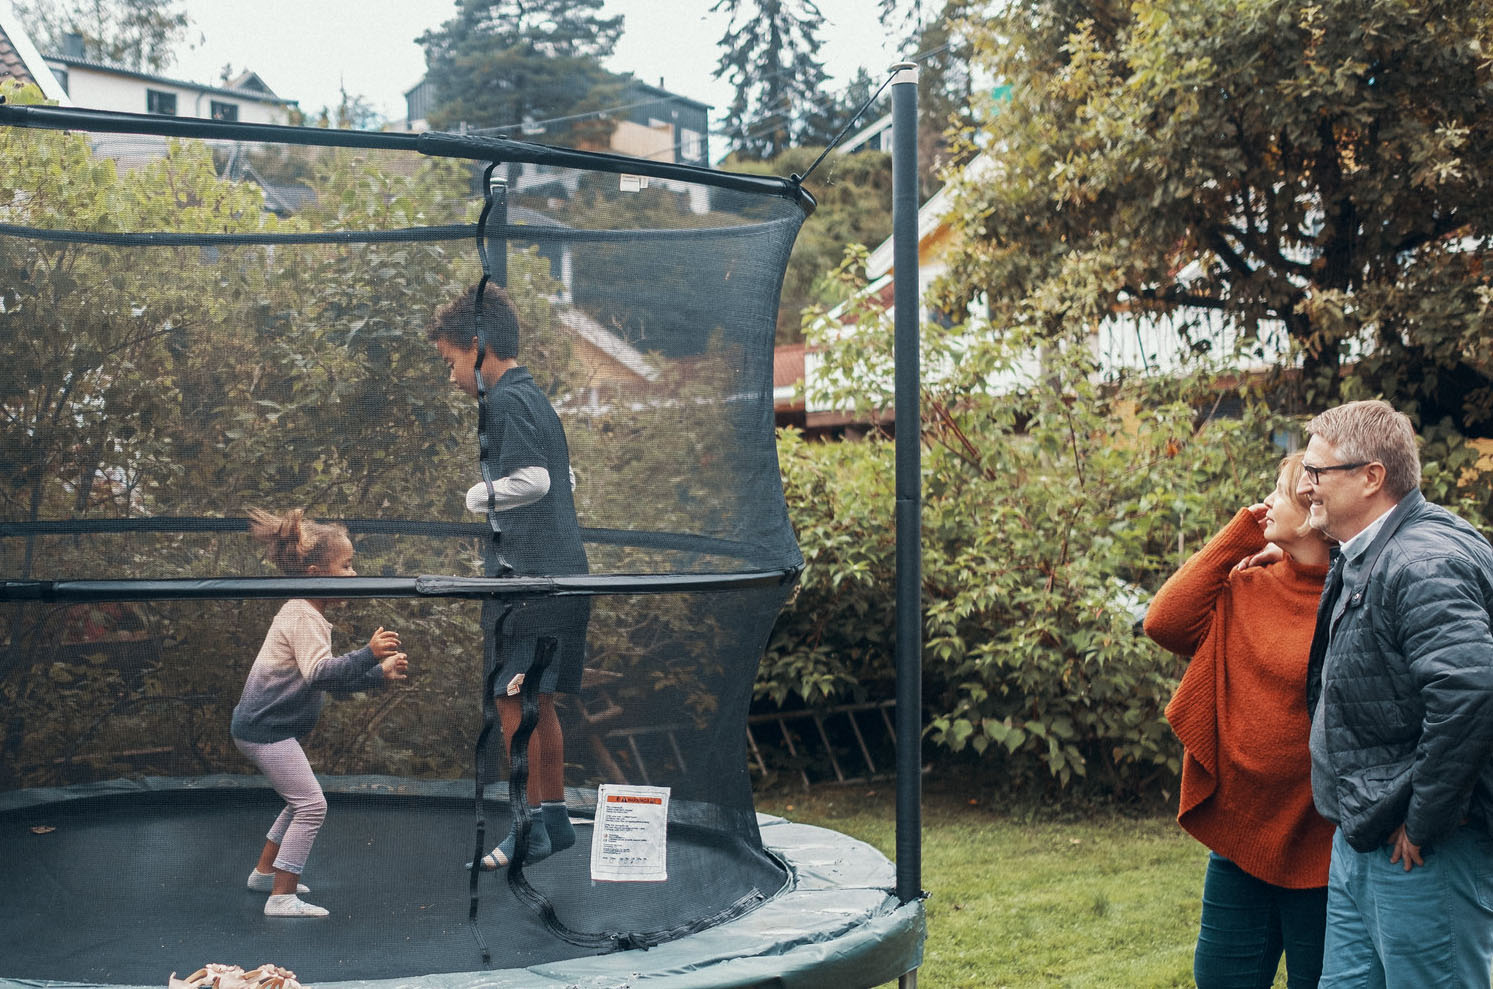 Bilde av to barn på trampoline, to voksne som ser på